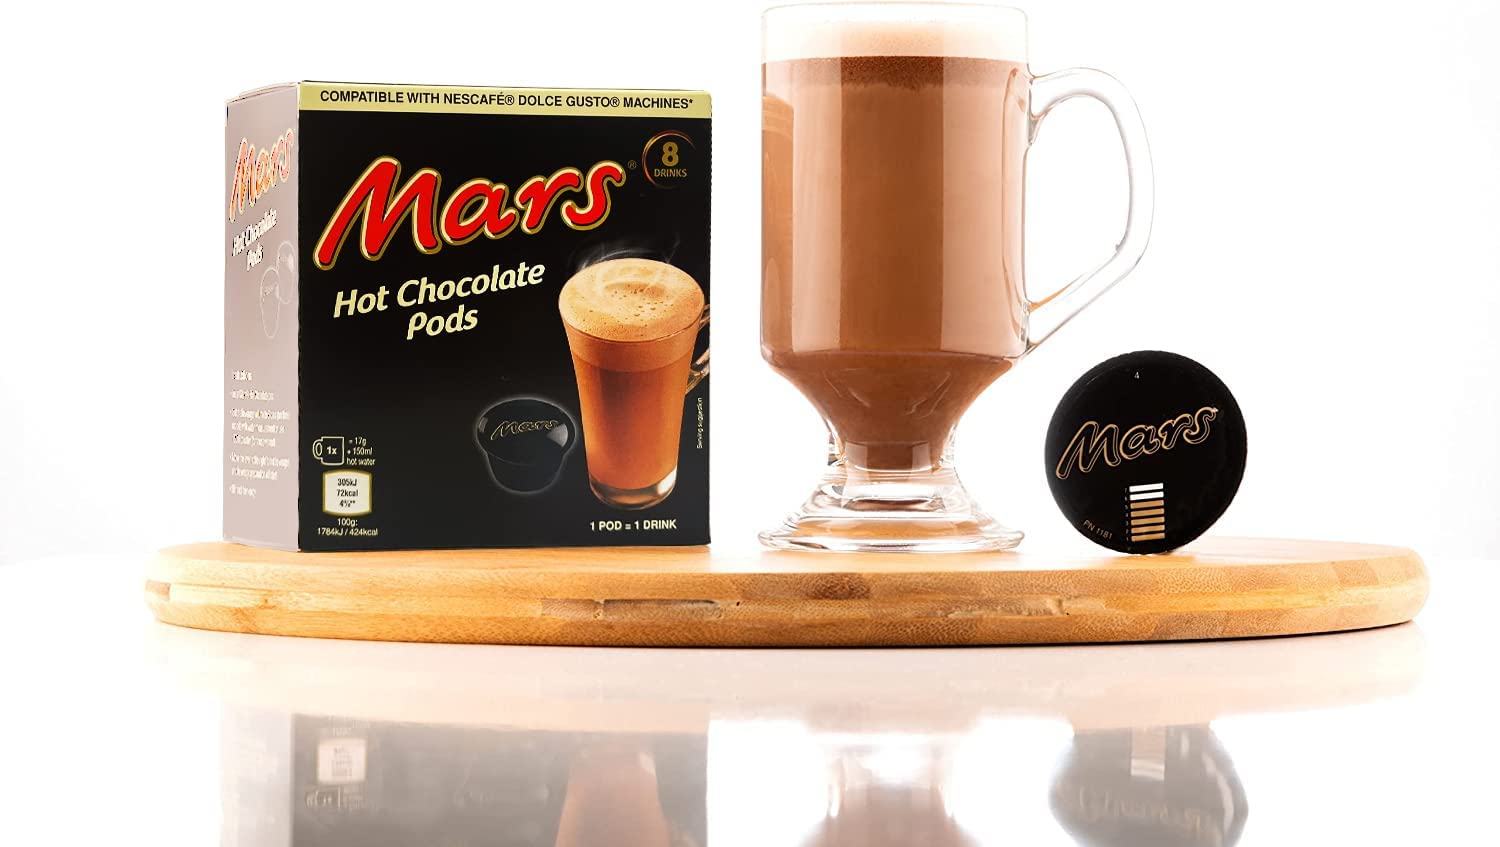 Mars Mars Celebrations - 8 Capsules for Dolce Gusto for €4.69.